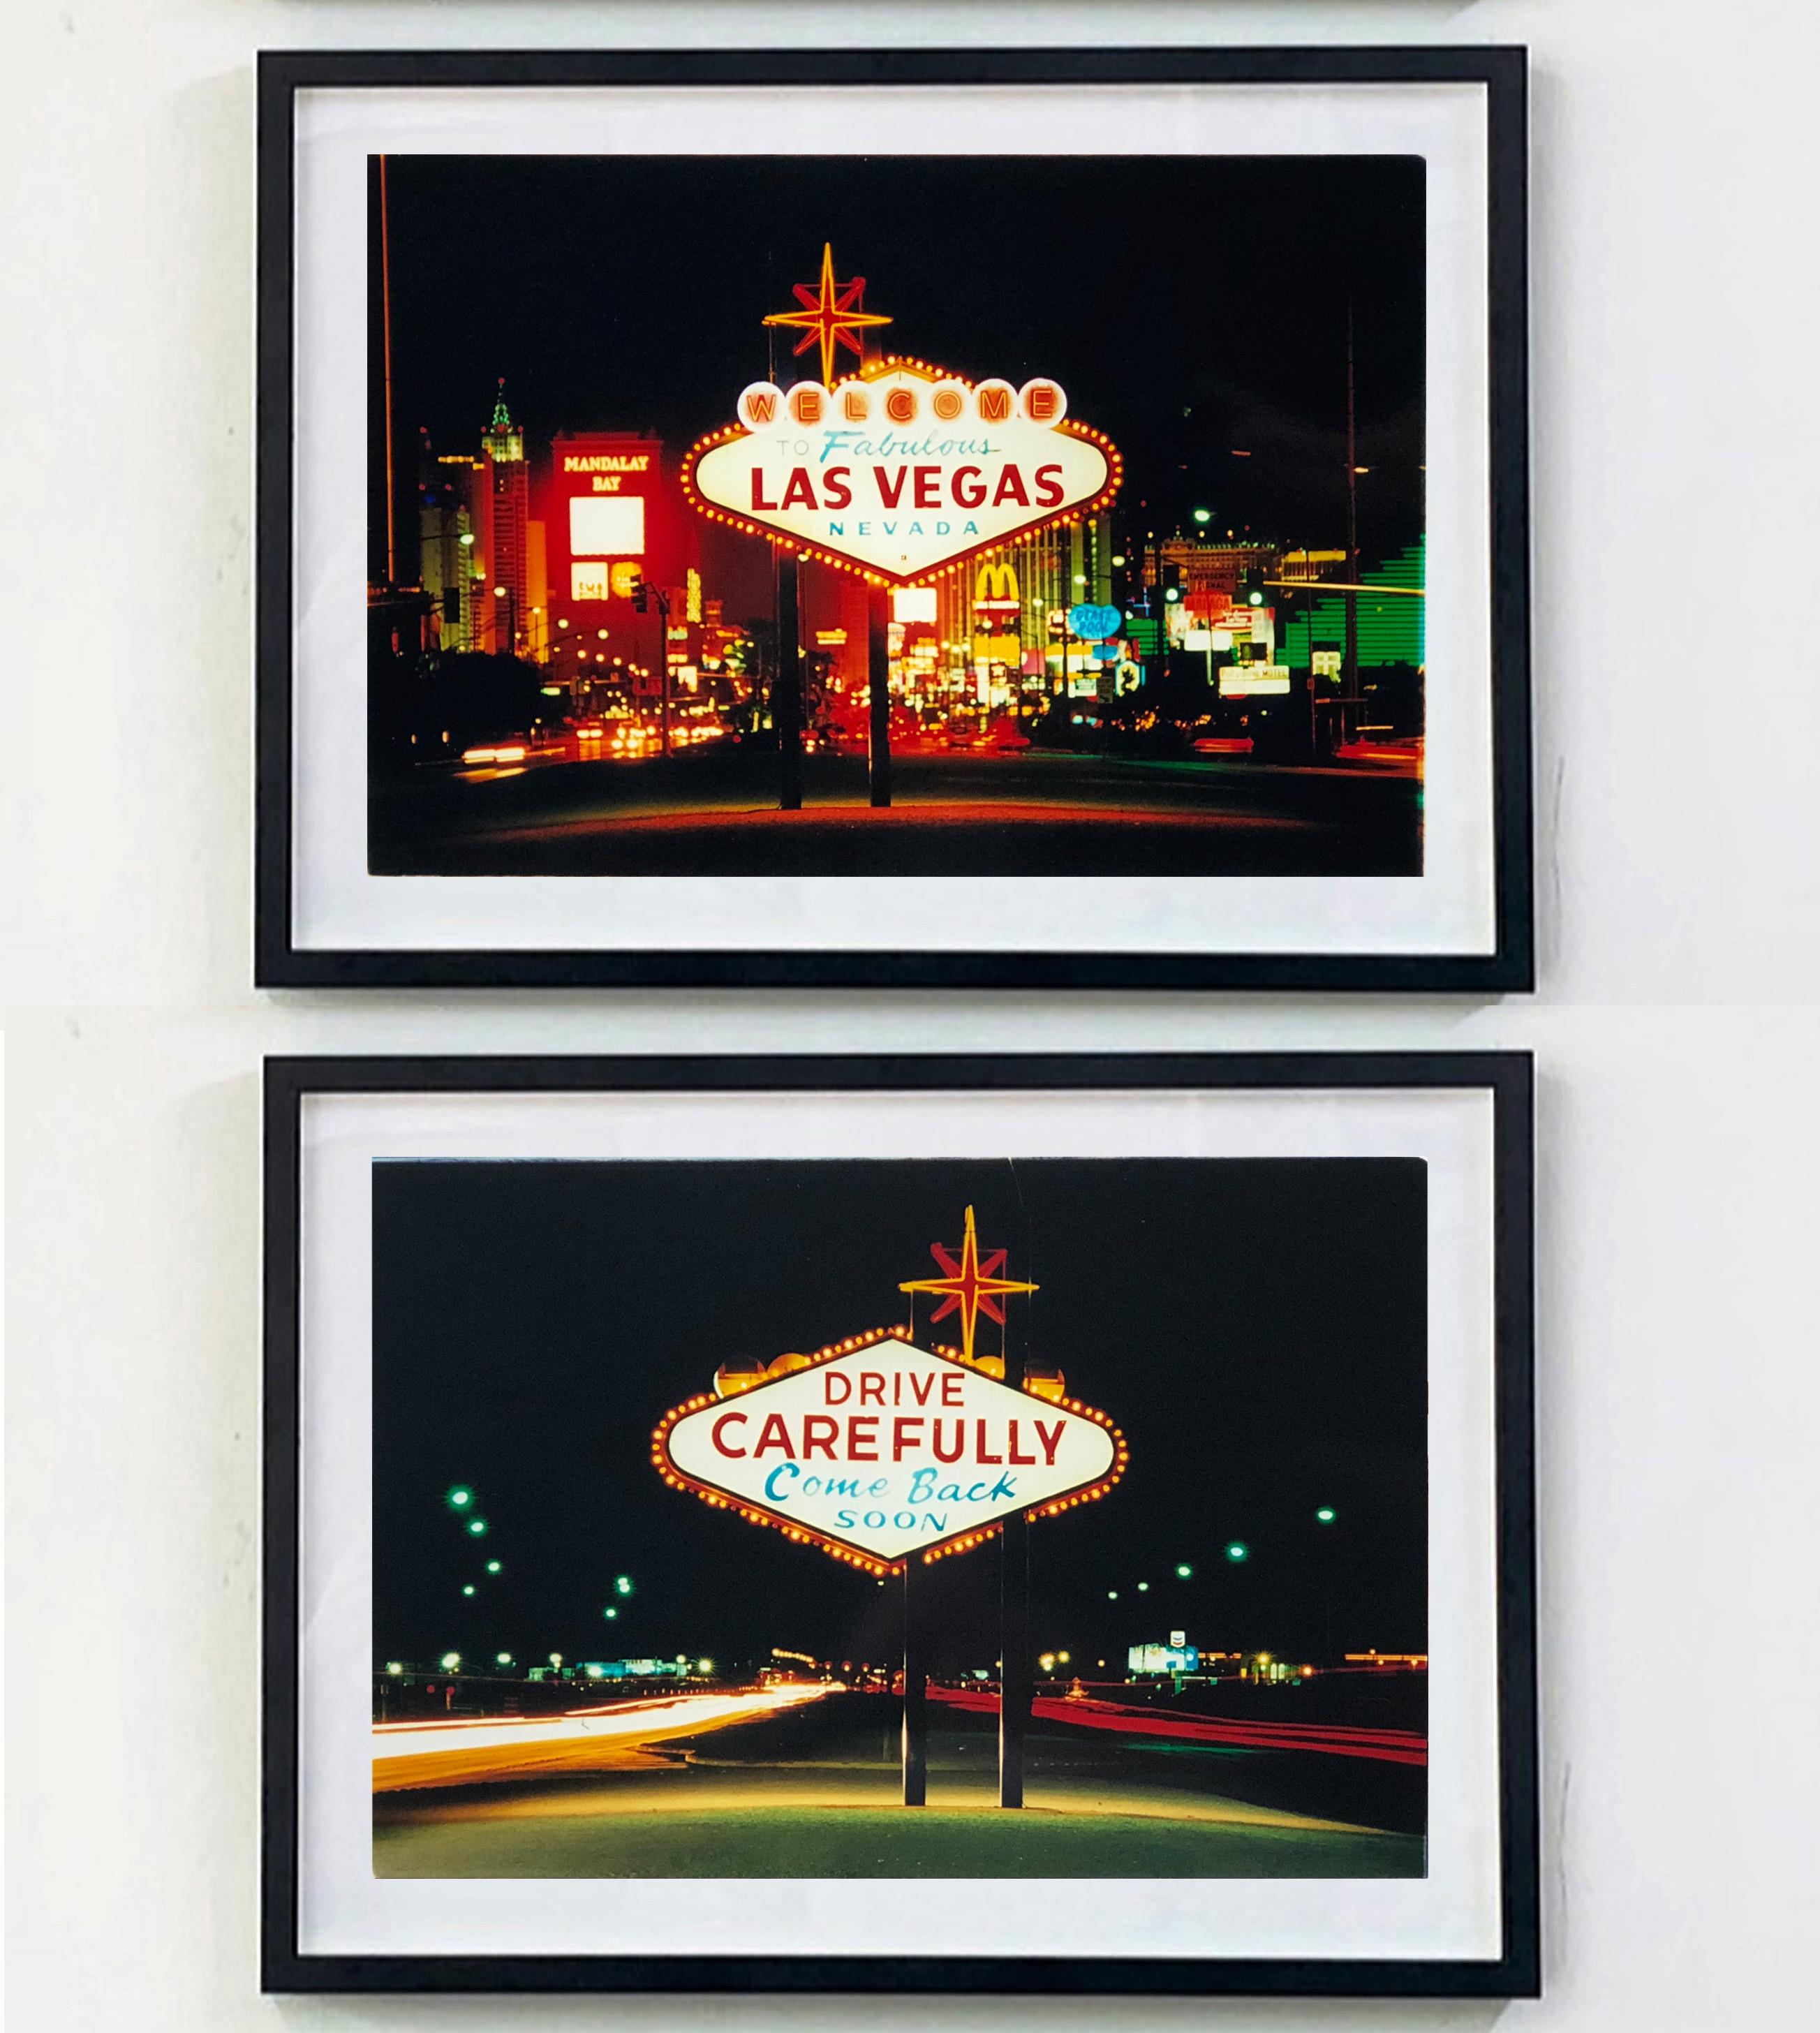 Leaving, Las Vegas, Nevada - Contemporary Print by Richard Heeps